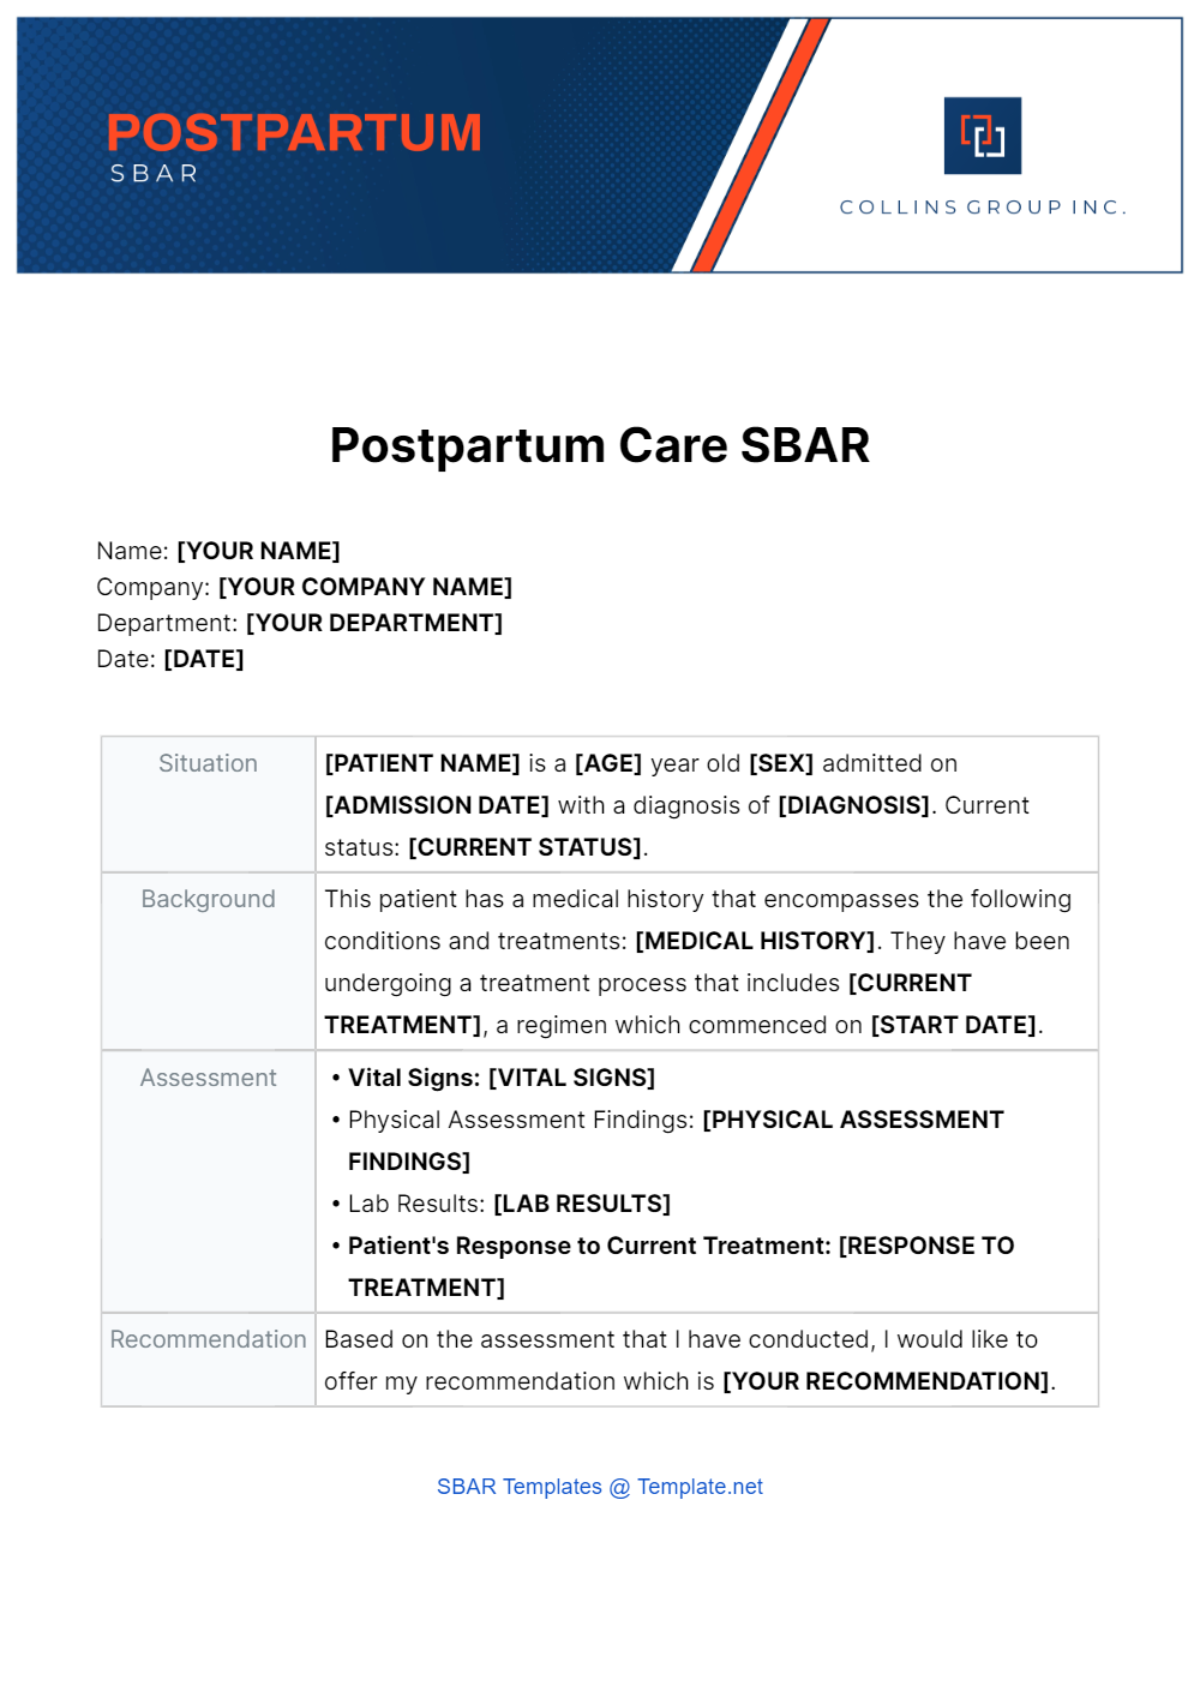 Postpartum Care SBAR Template